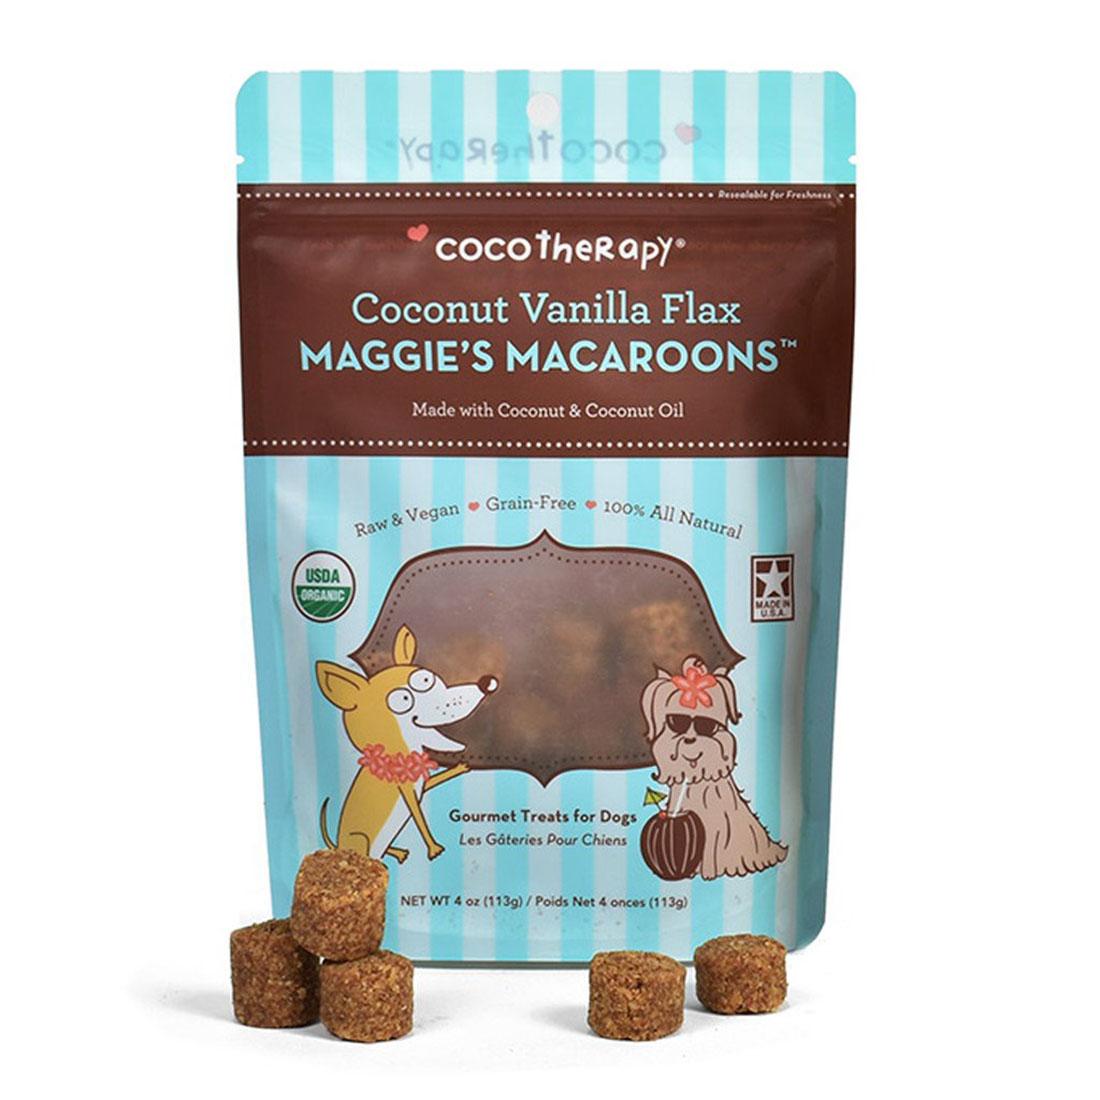 CocoTherapy Maggie's Macaroons Dog  Treats - Coconut Vanilla Flax